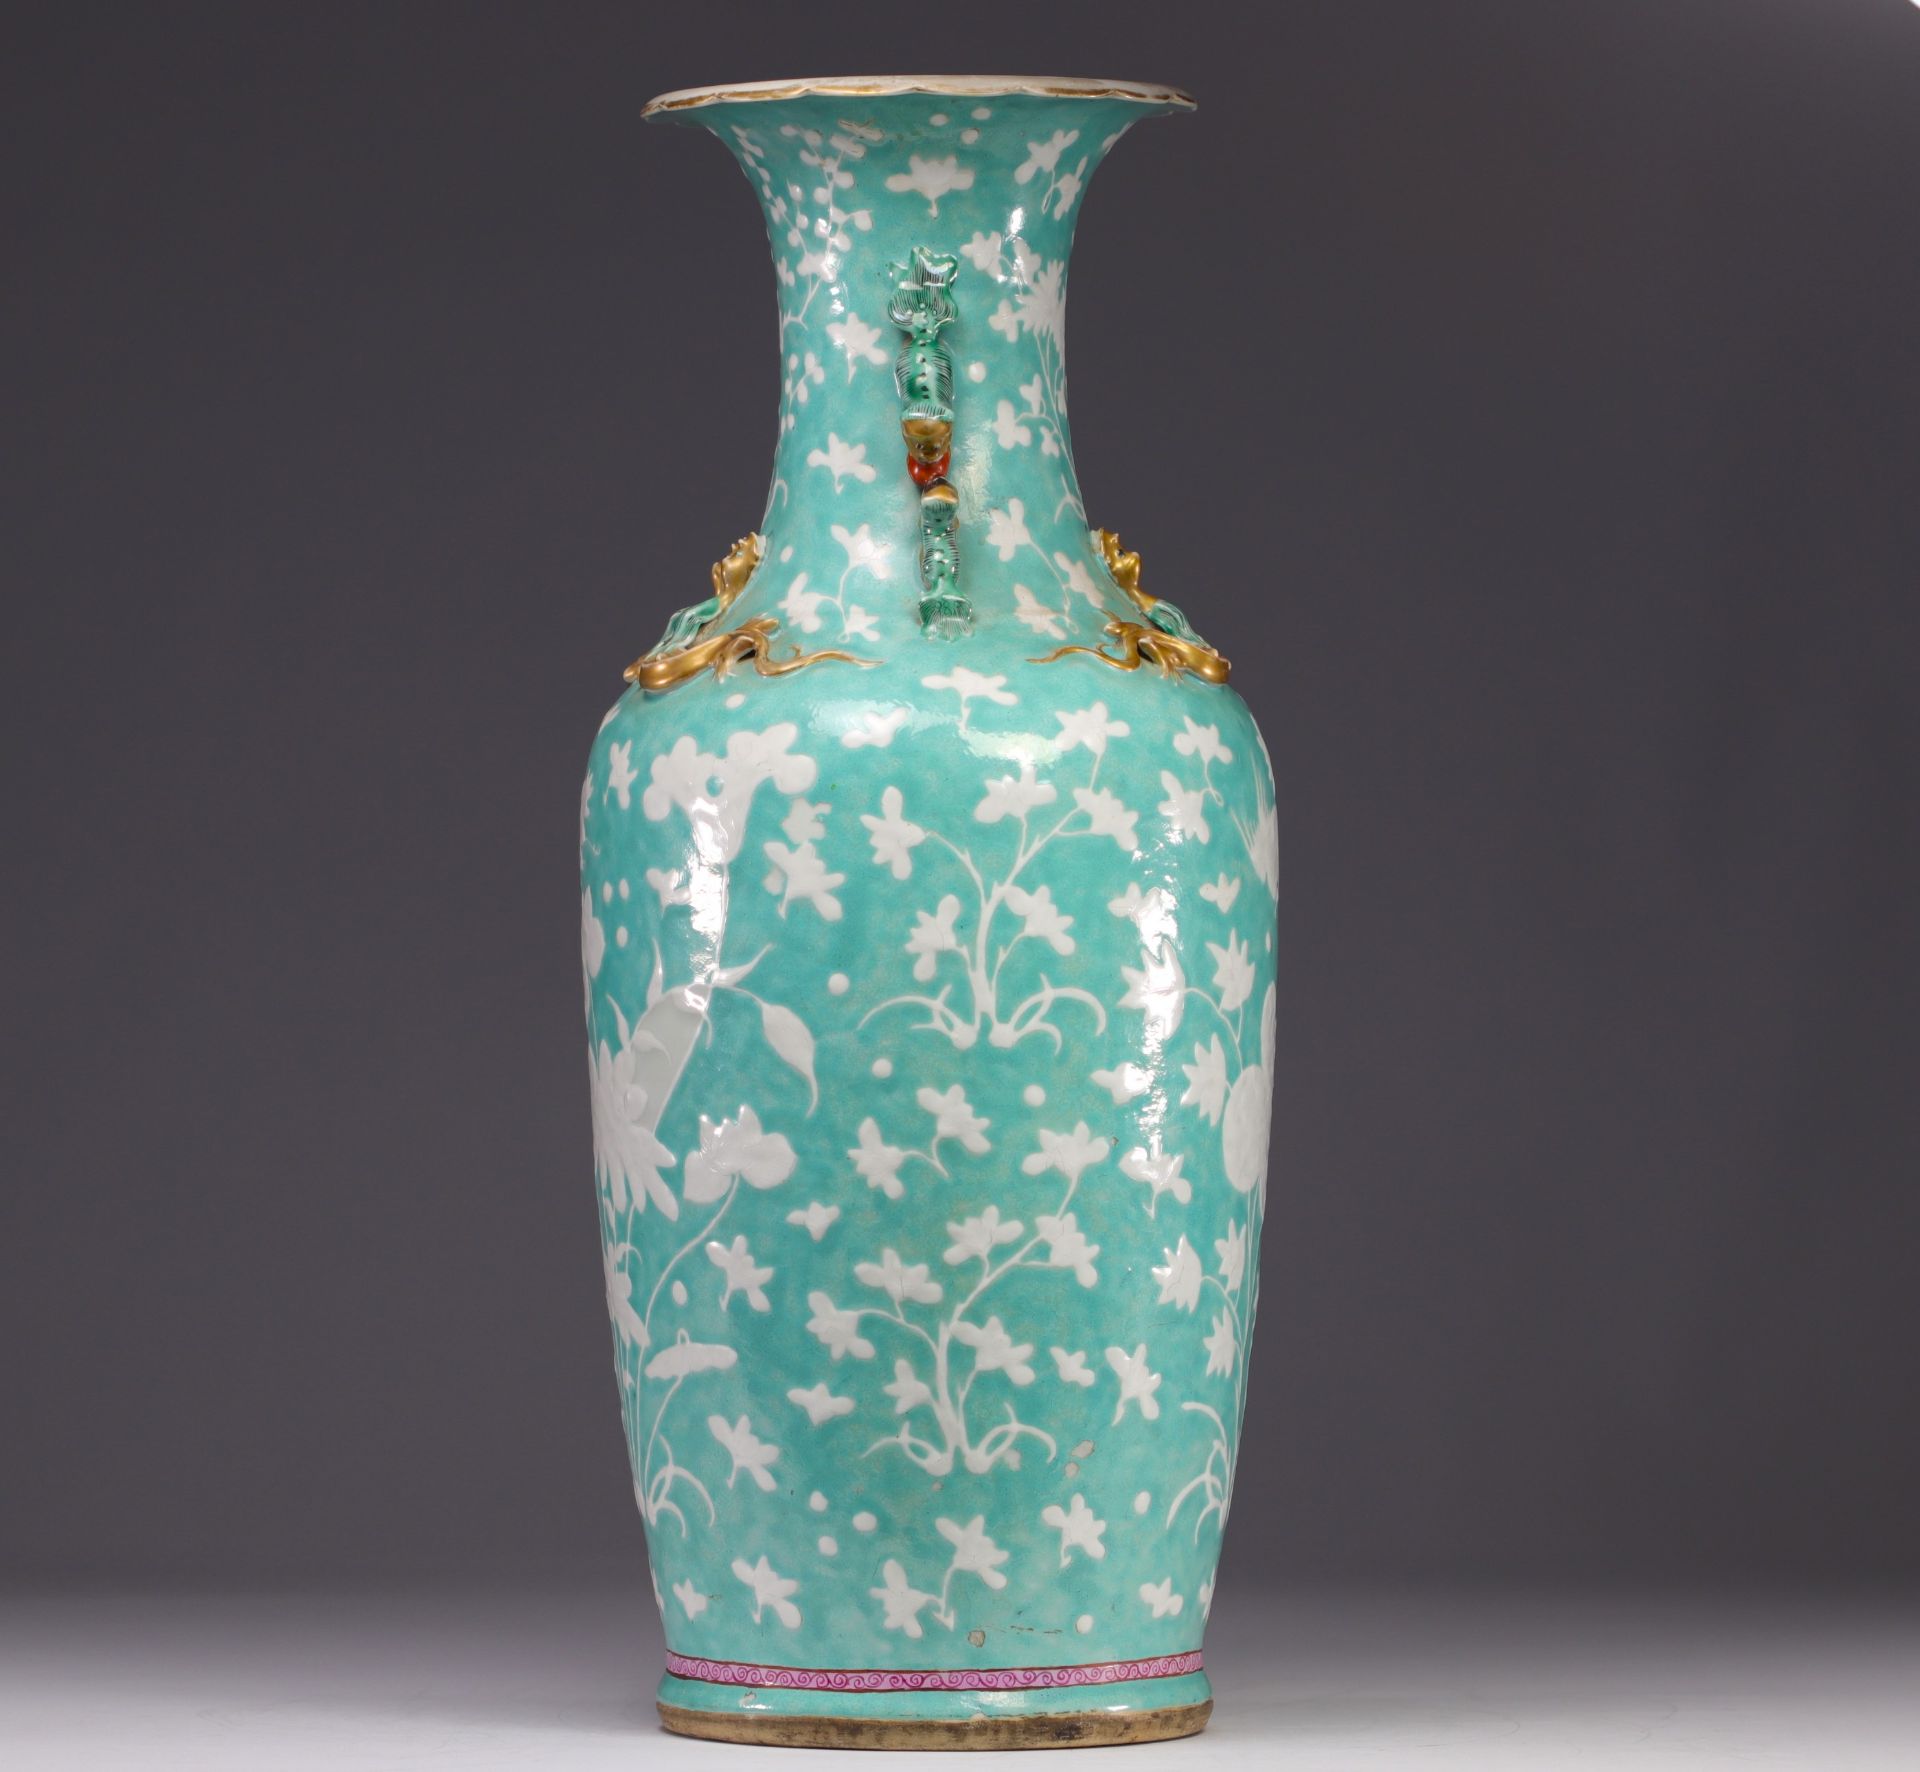 China - large porcelain vase decorated with flowers and birds, turquoise glaze, 19th century. - Image 3 of 6